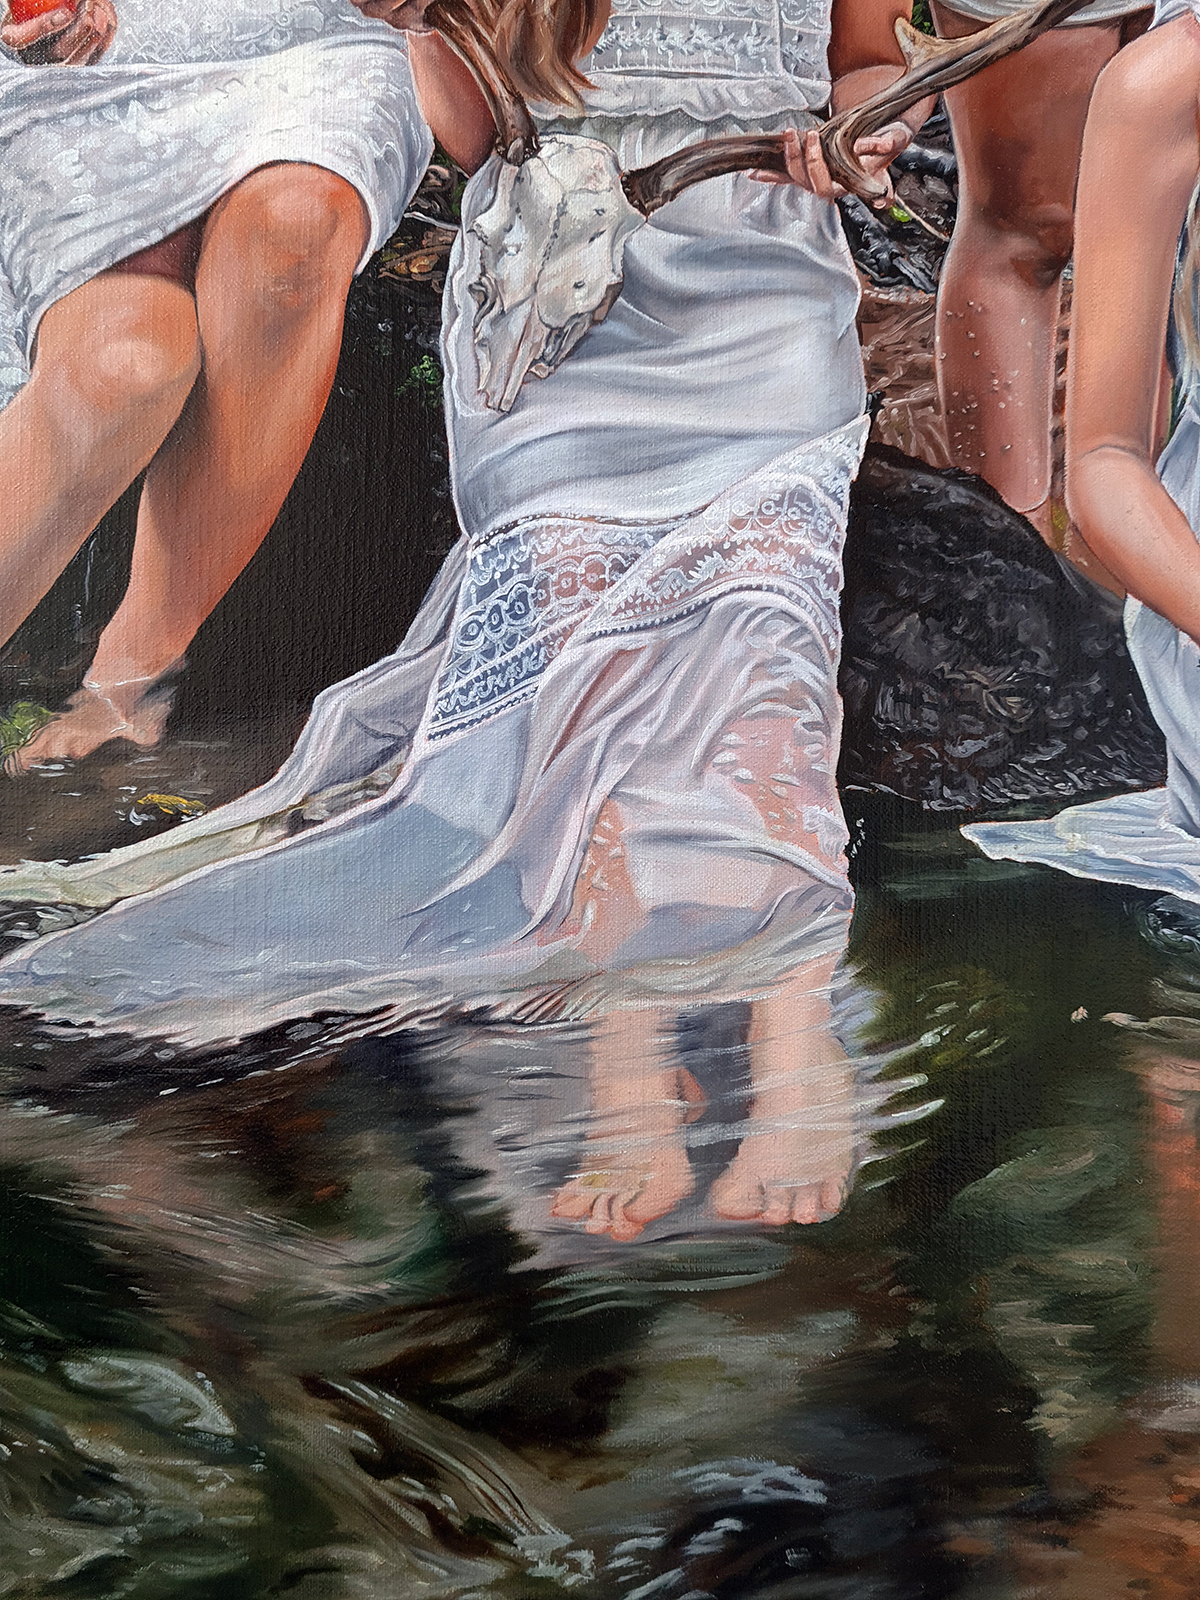 white dress in running water creek woods forest christina ridgeway magical realism art oils